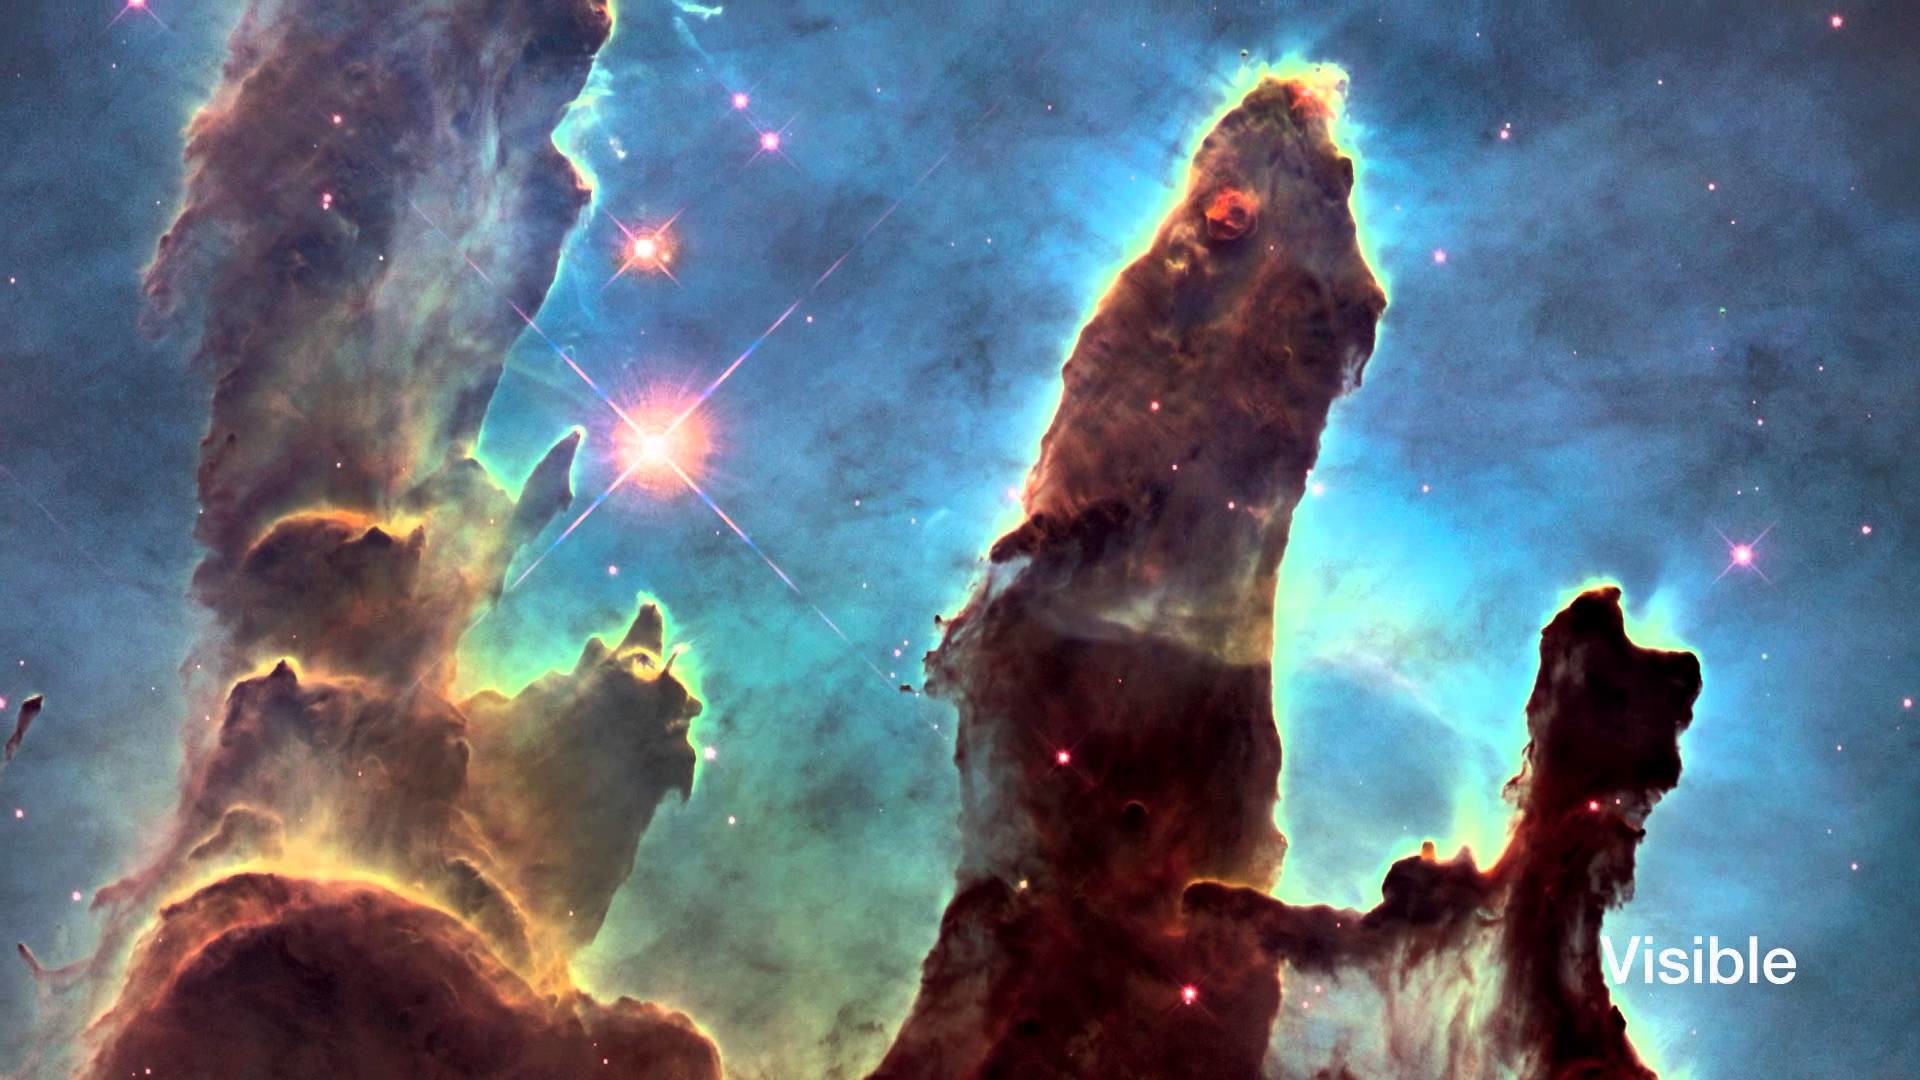 Hubble Pillars of Creation Wallpaper (58+ images)